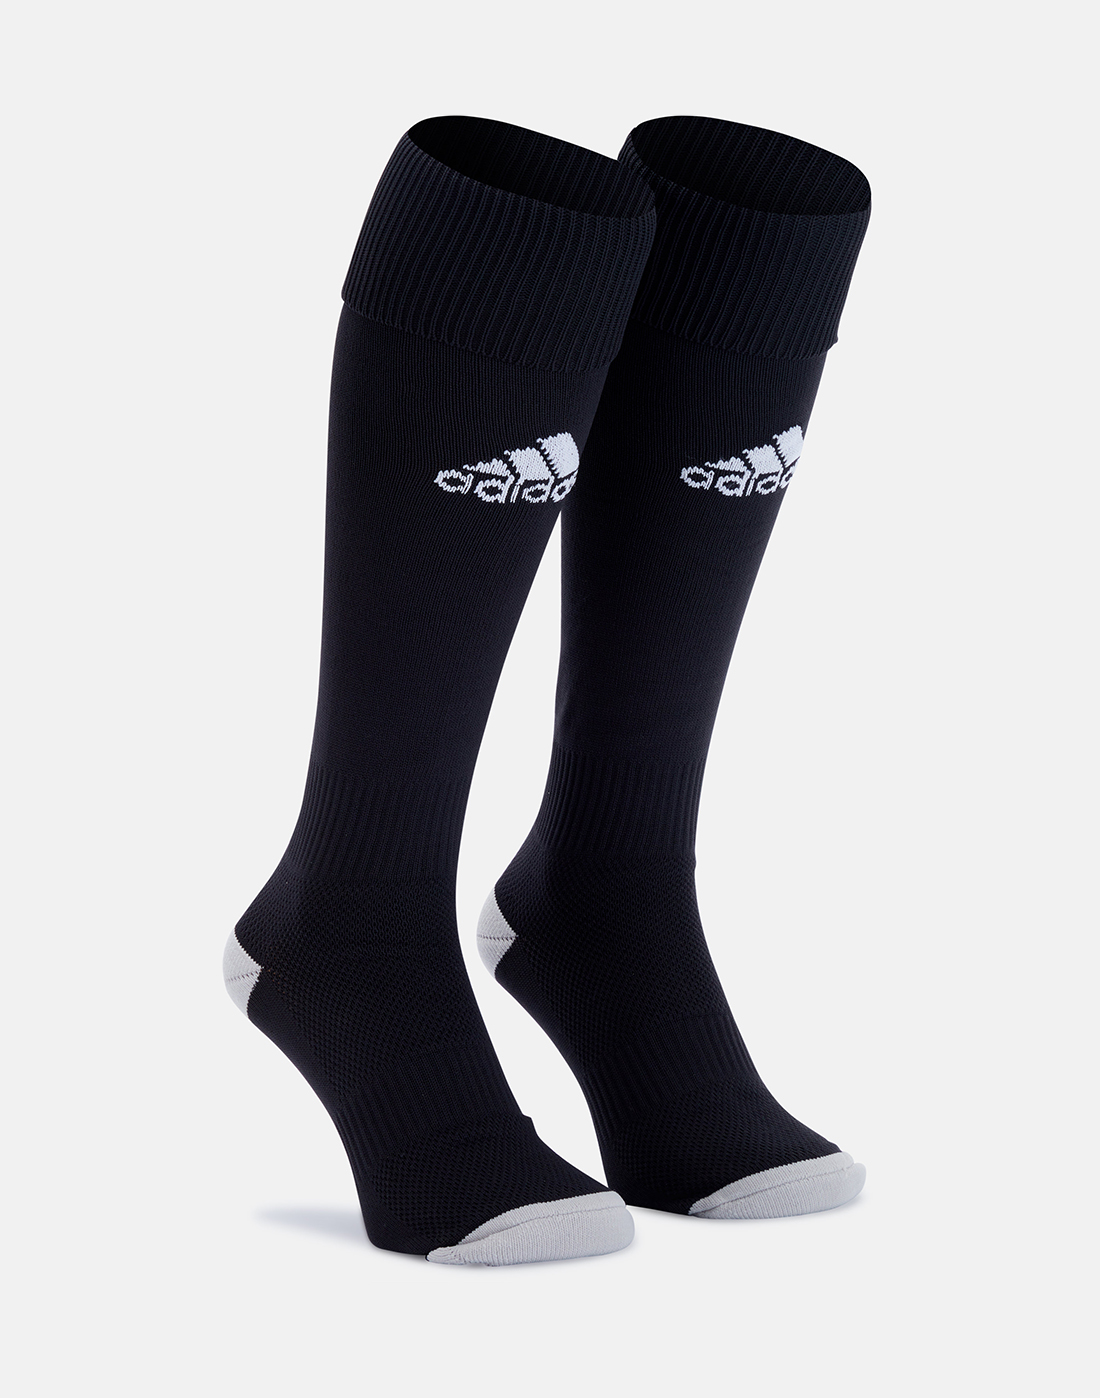 adidas Milano Football Socks - Black